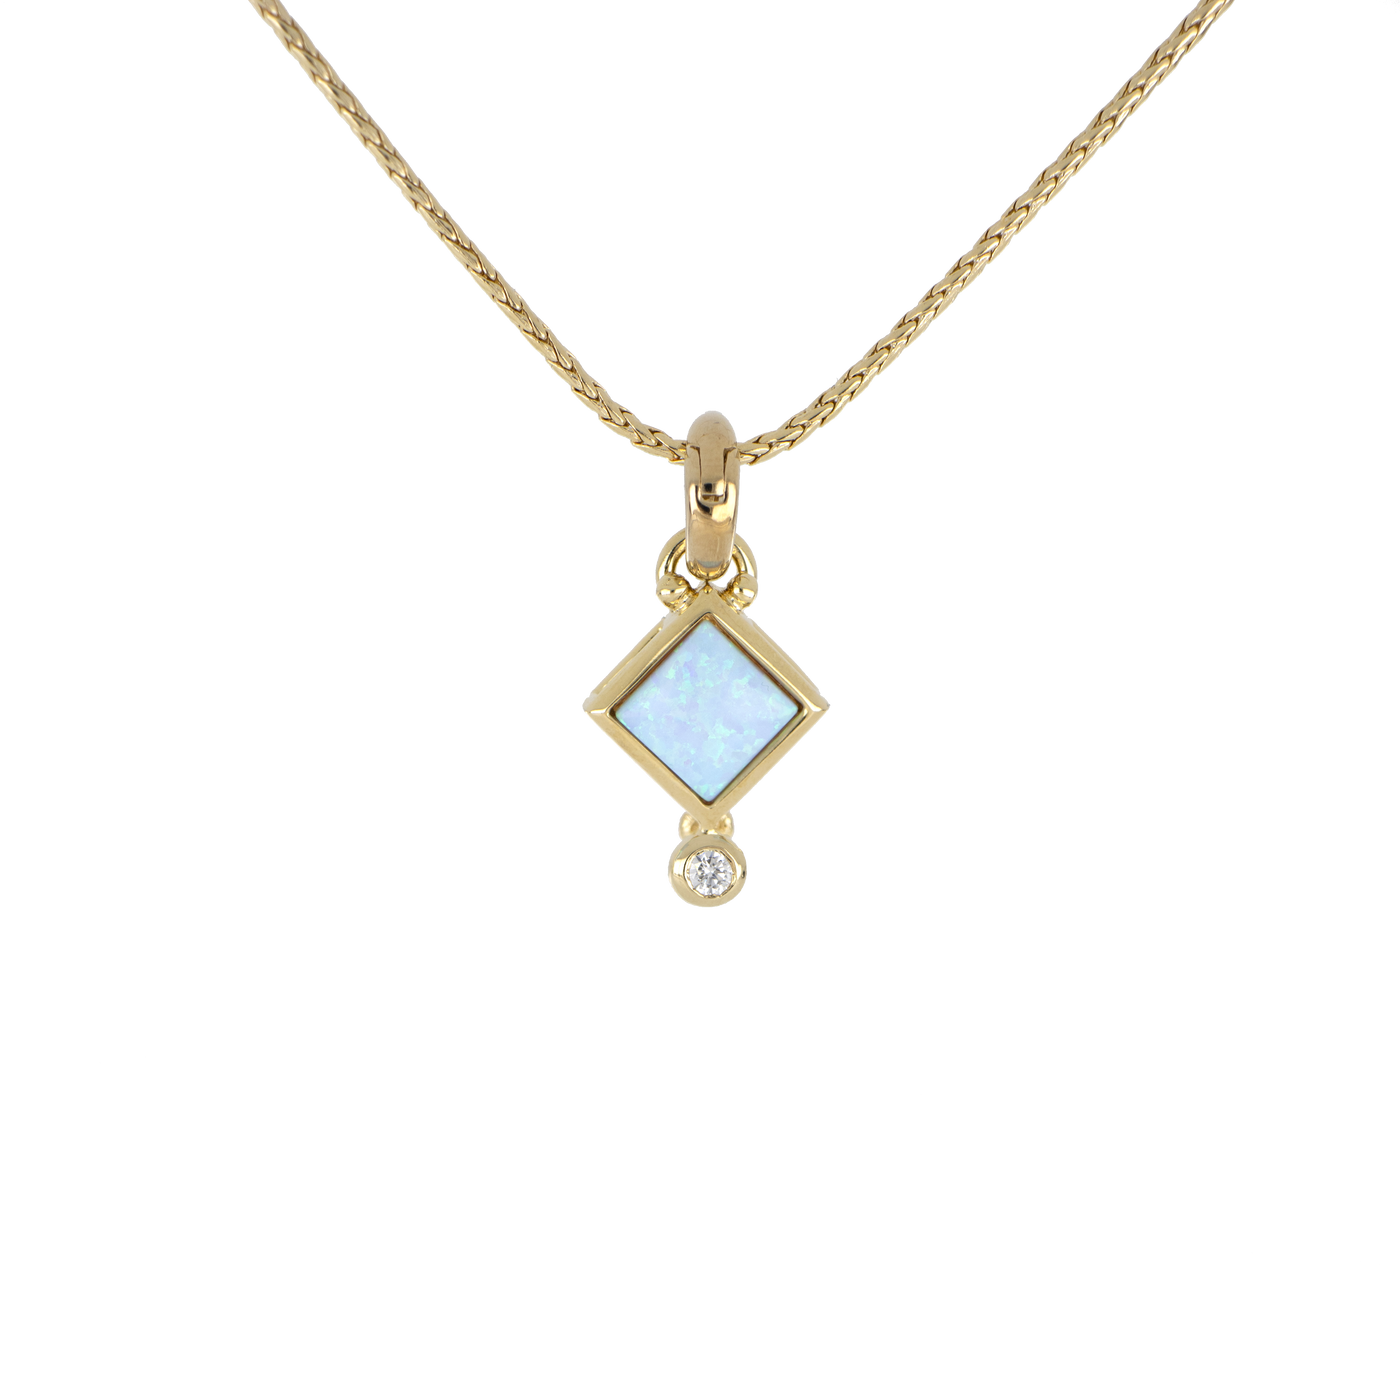 Opalas do Mar Collection - Blue Diamond Opal Pendant with Chain